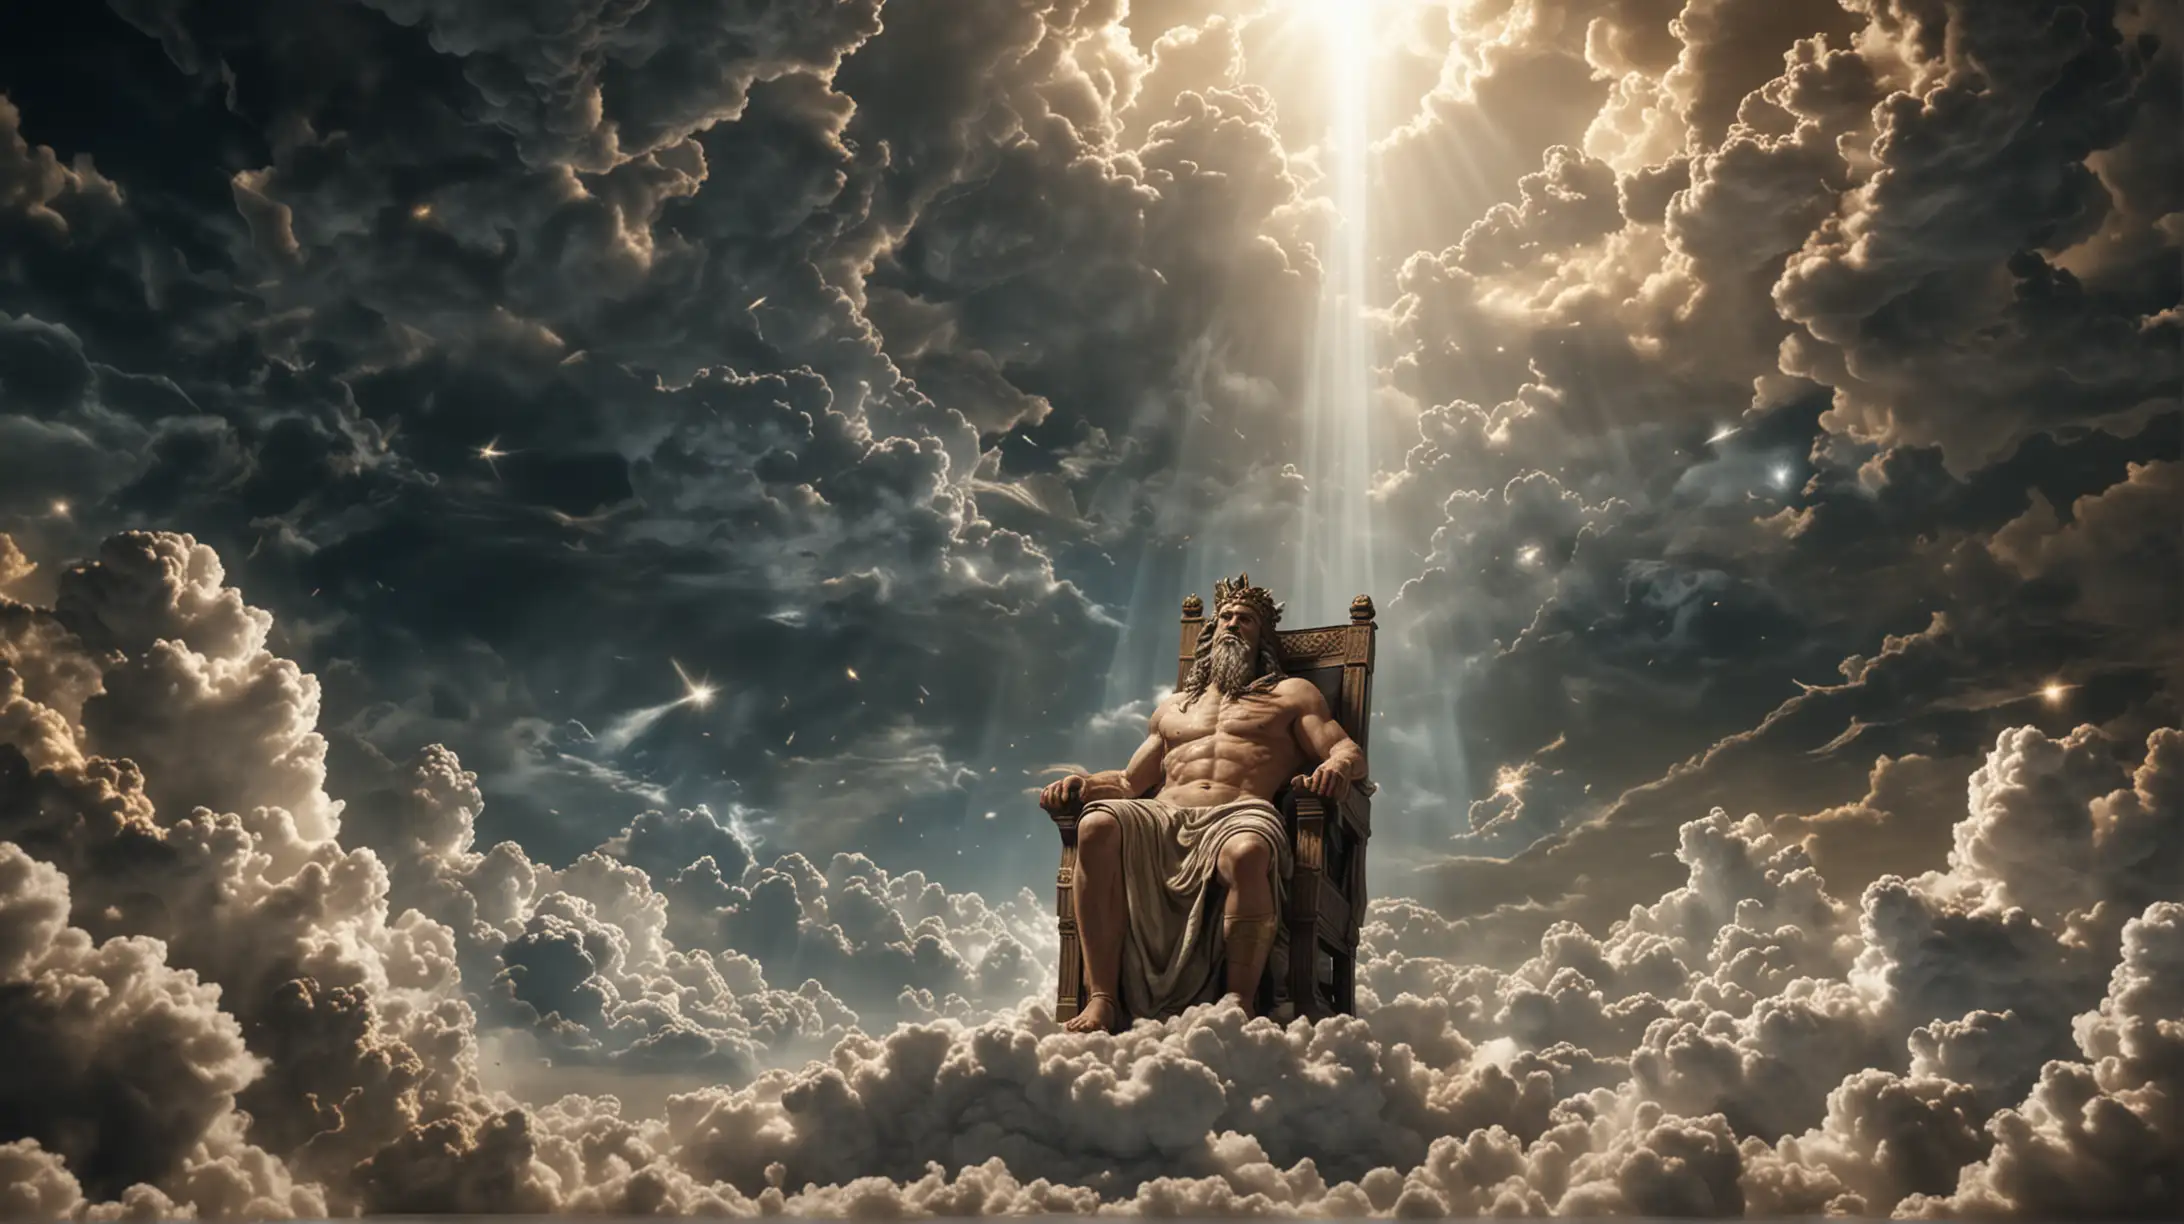 Hyper Realistic Depiction of Zeus in Heavenly Throne